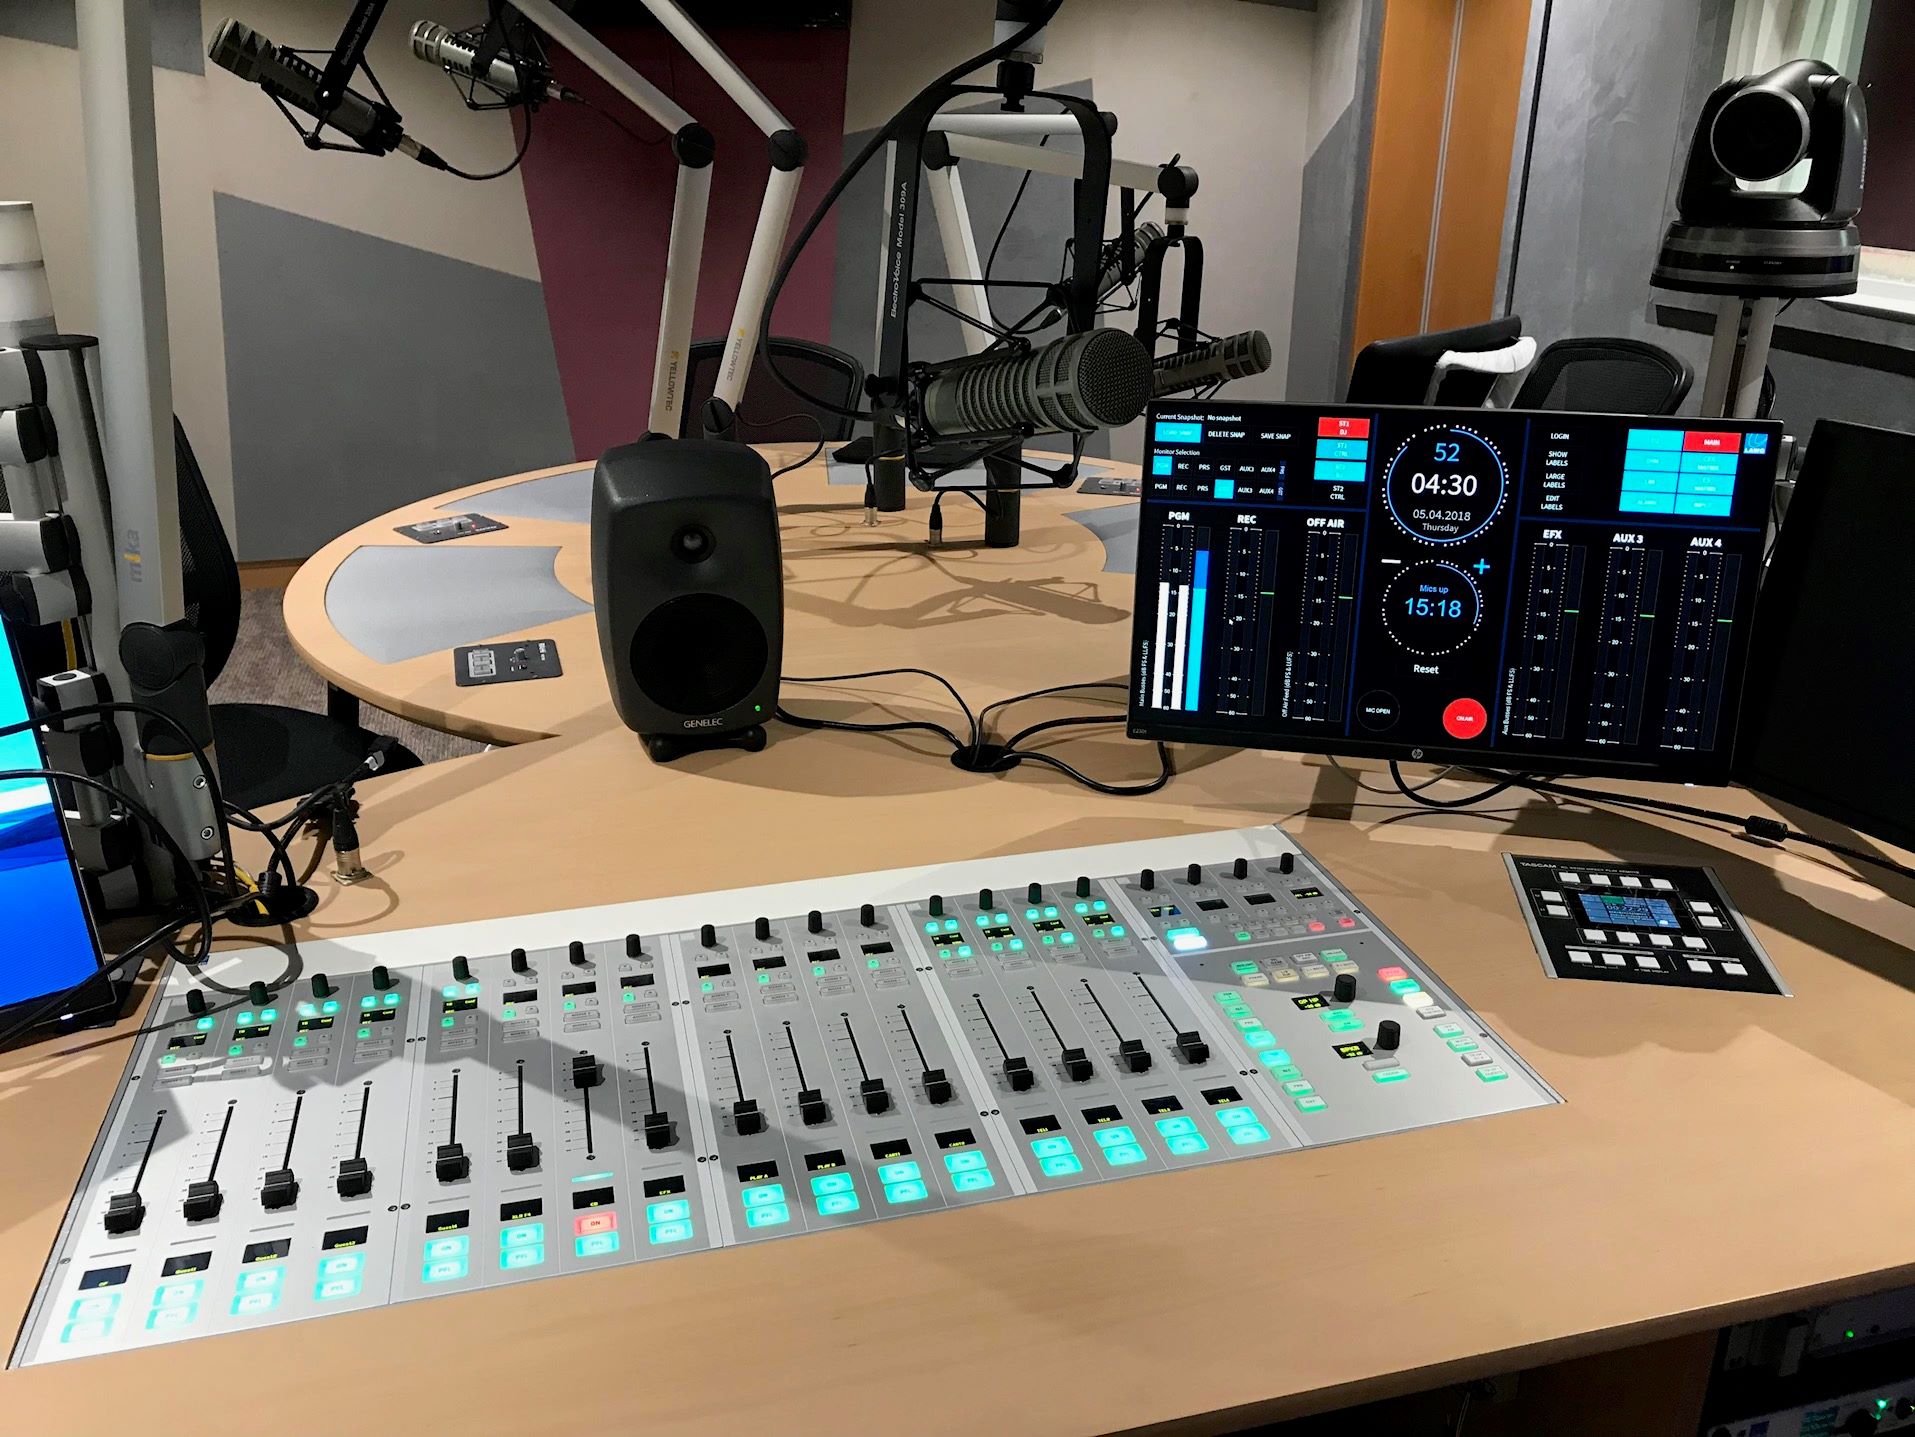 Radio Station Equipment: An Introduction